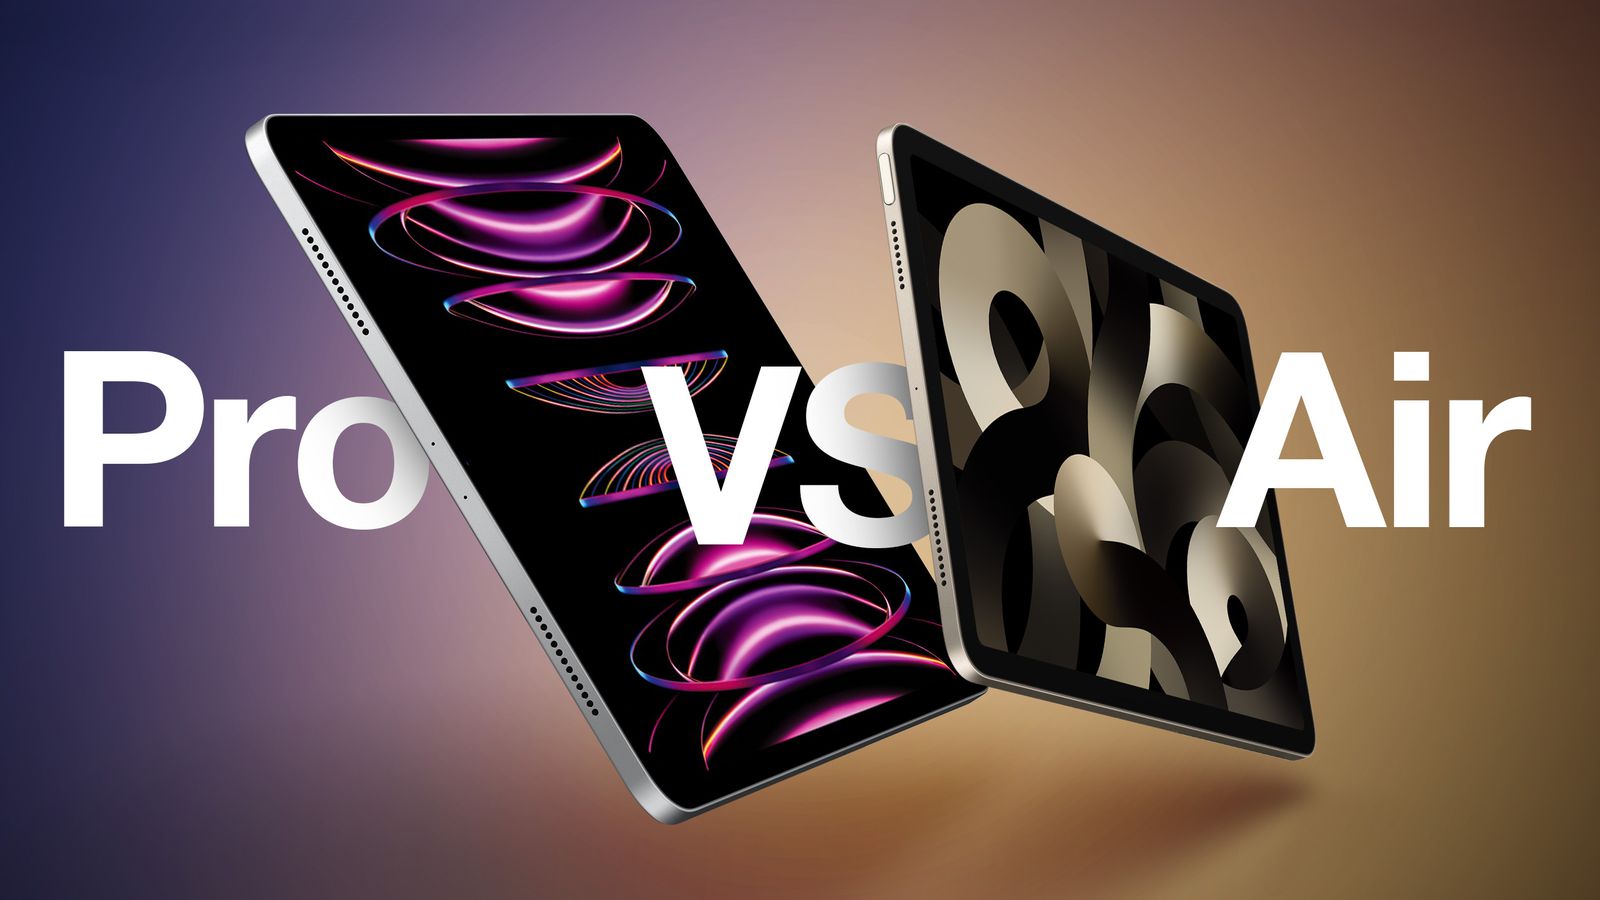 iPad 10 vs 9 vs iPad Air: How the lineup compares - 9to5Mac